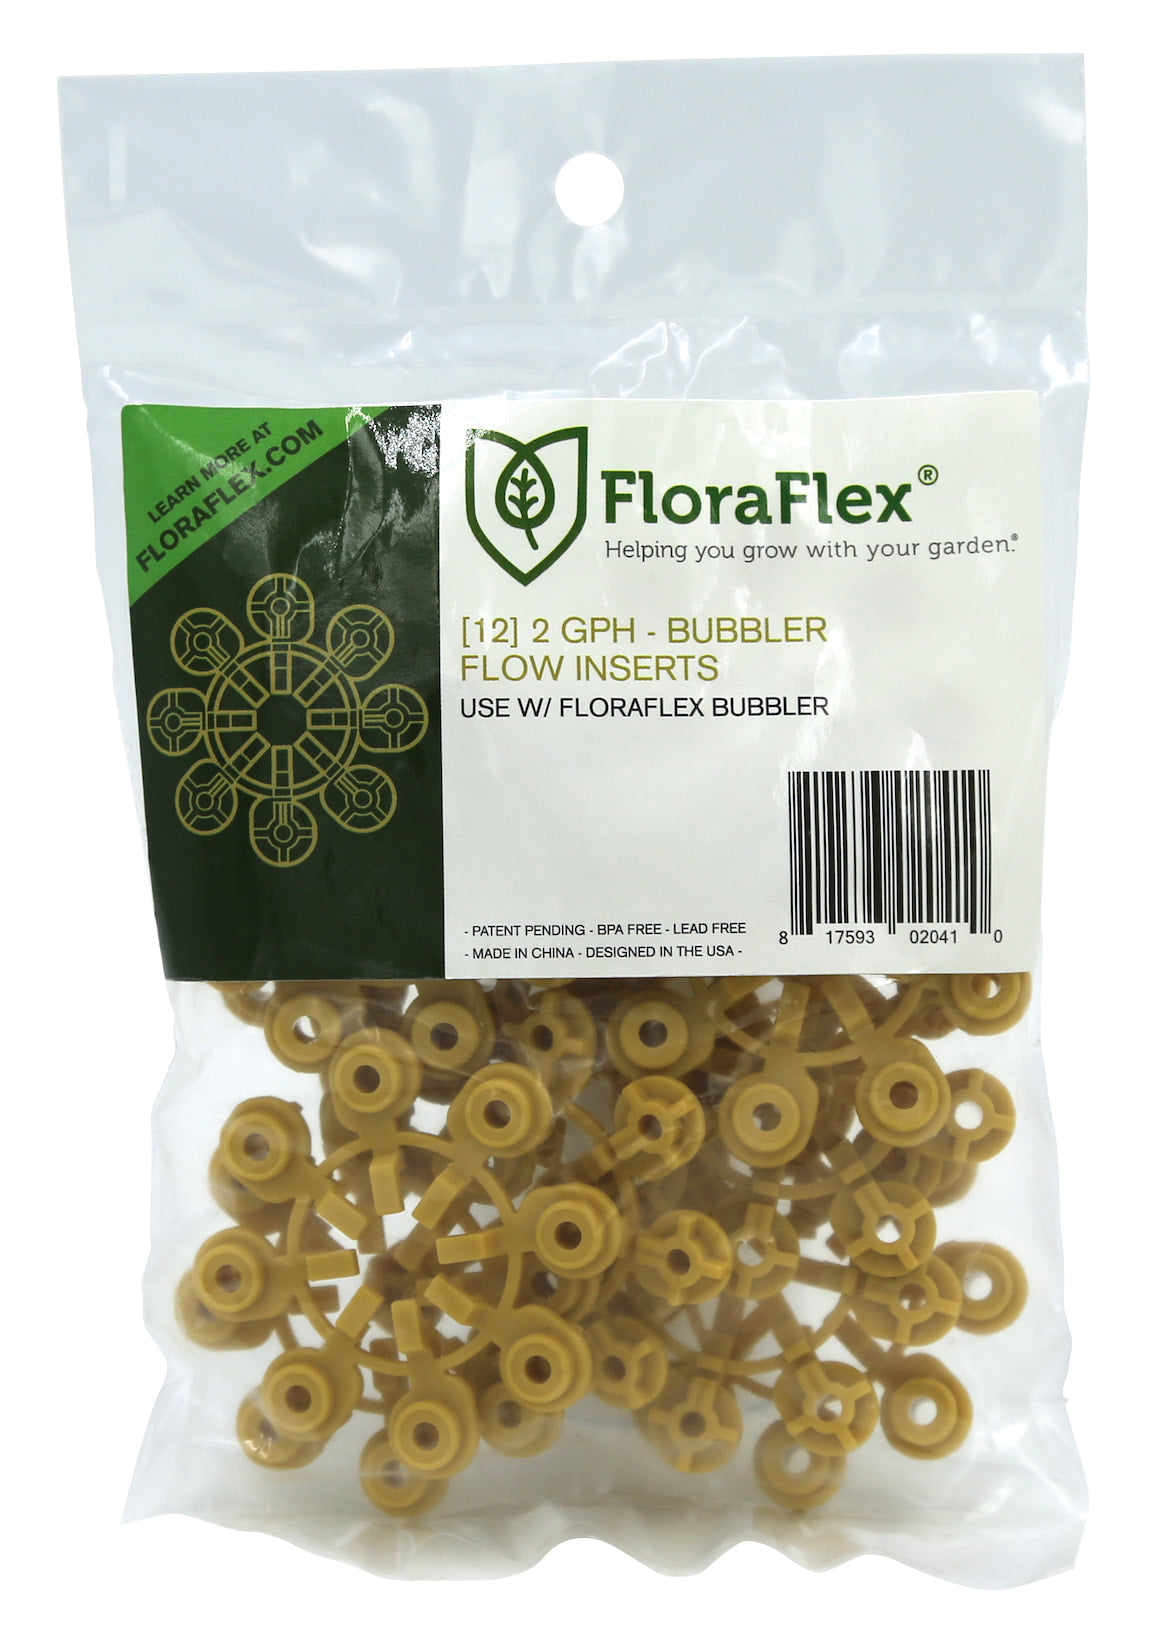 FloraFlex Bubbler Flow Inserts